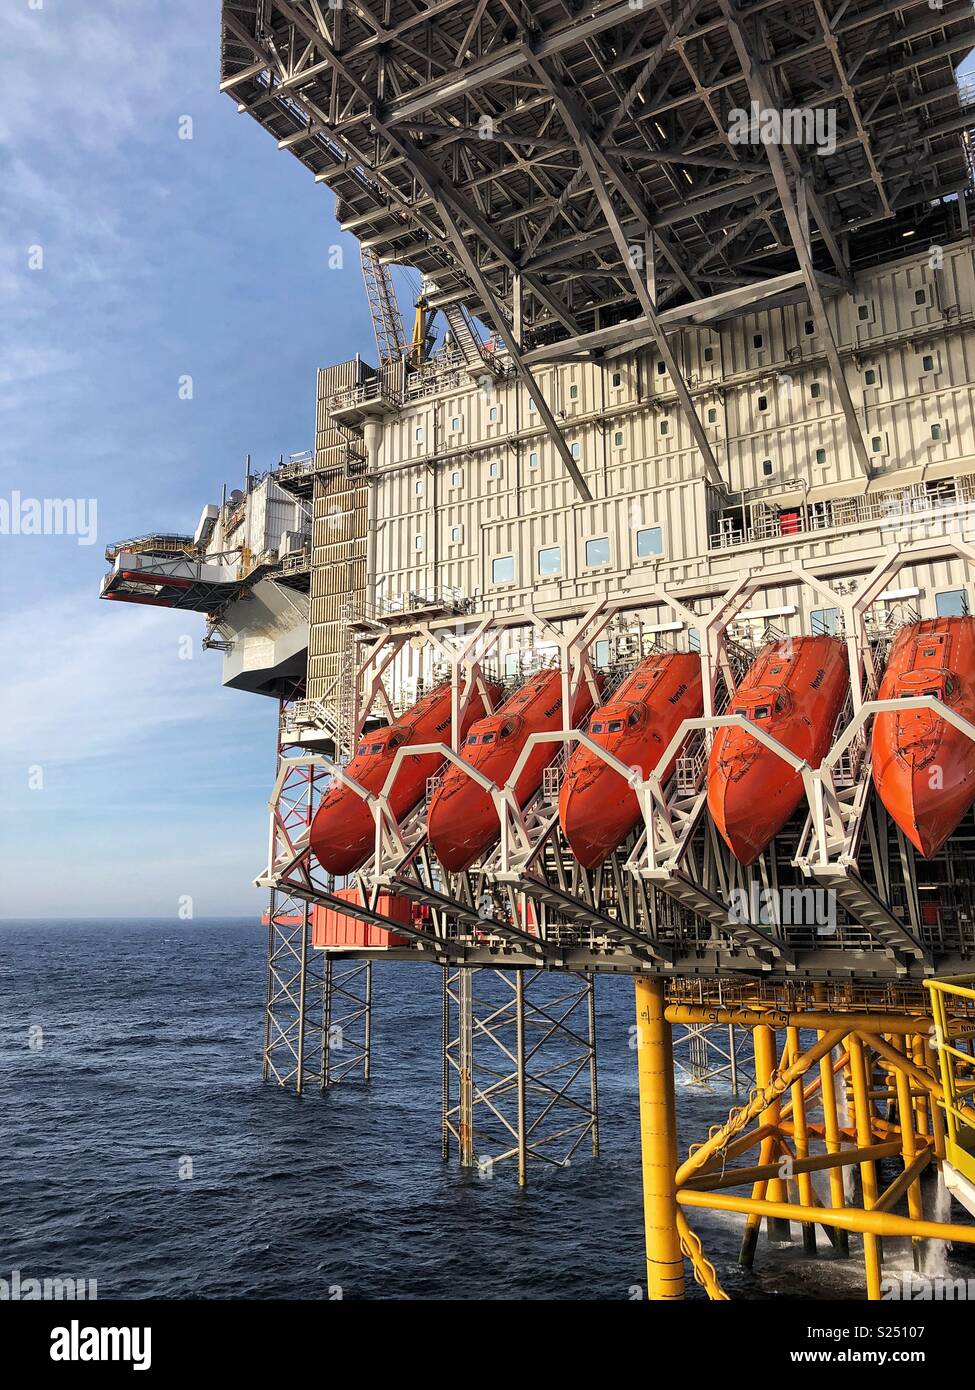 Mariner A platform North Sea oil rig: credit Lee Ramsden / Alamy Stock Photo